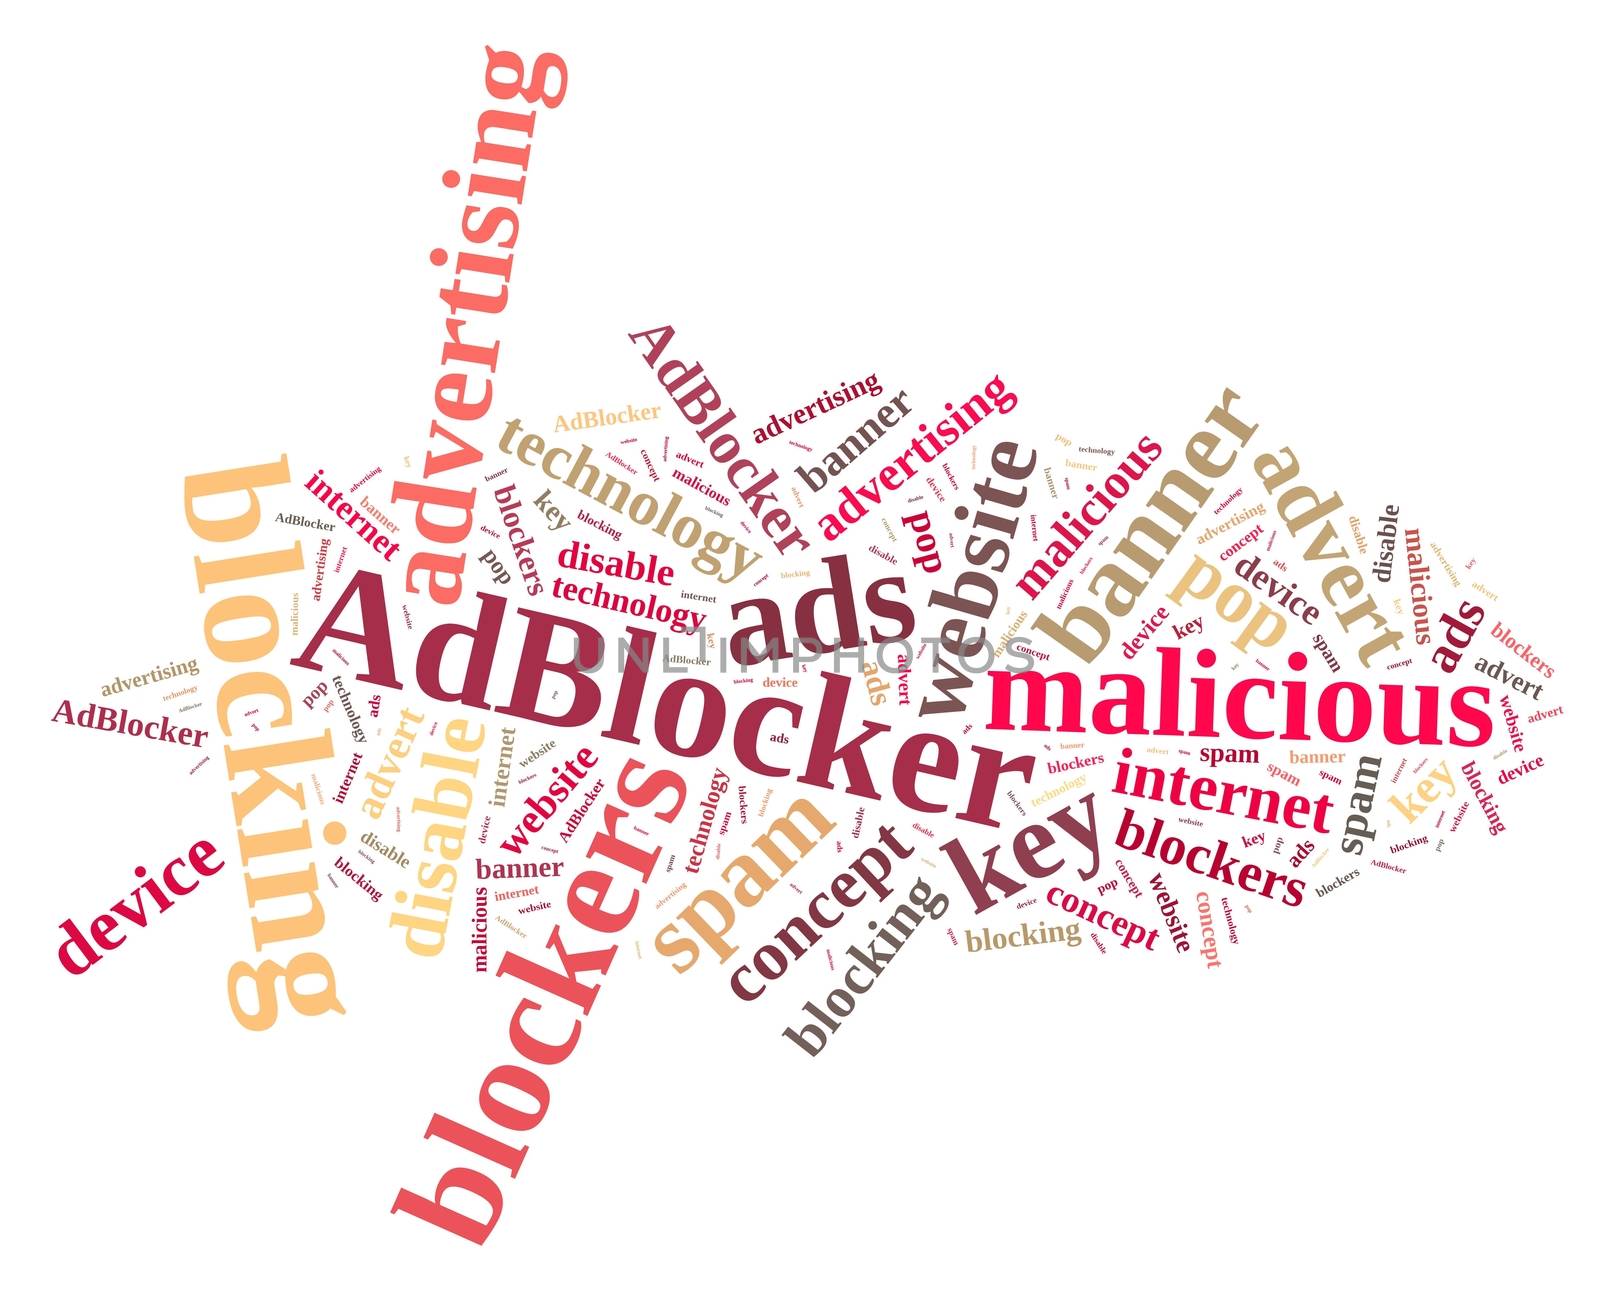 Word cloud on ad blockers. by CreativePhotoSpain